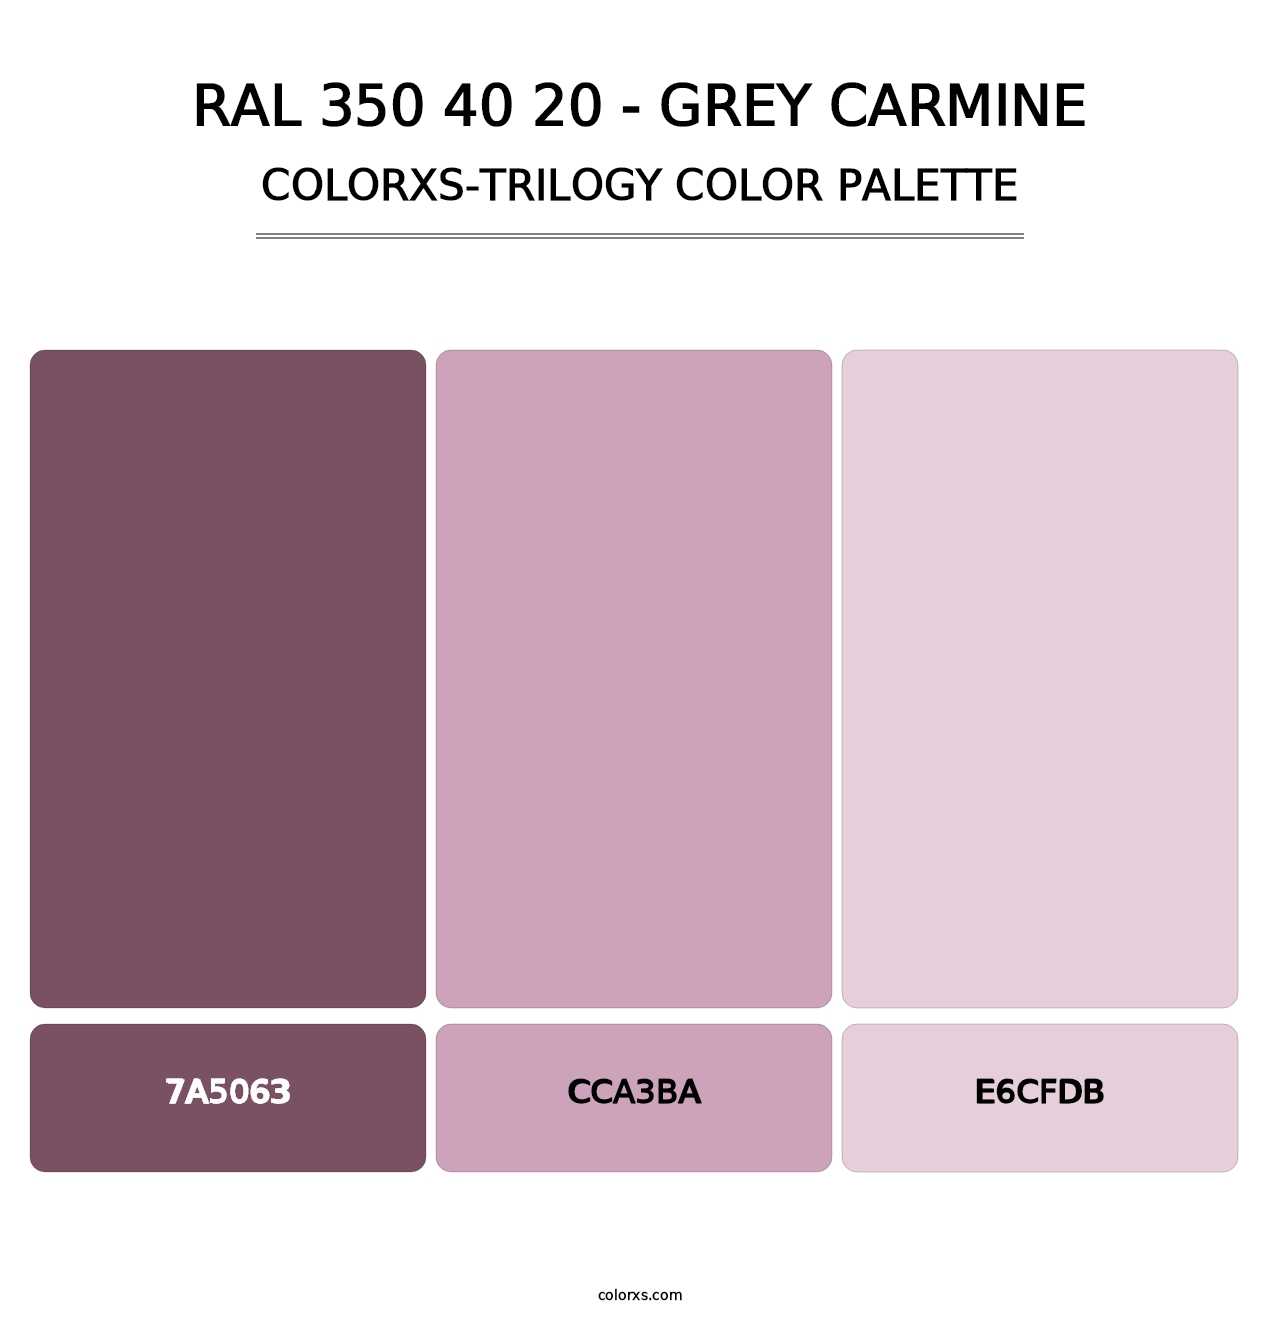 RAL 350 40 20 - Grey Carmine - Colorxs Trilogy Palette